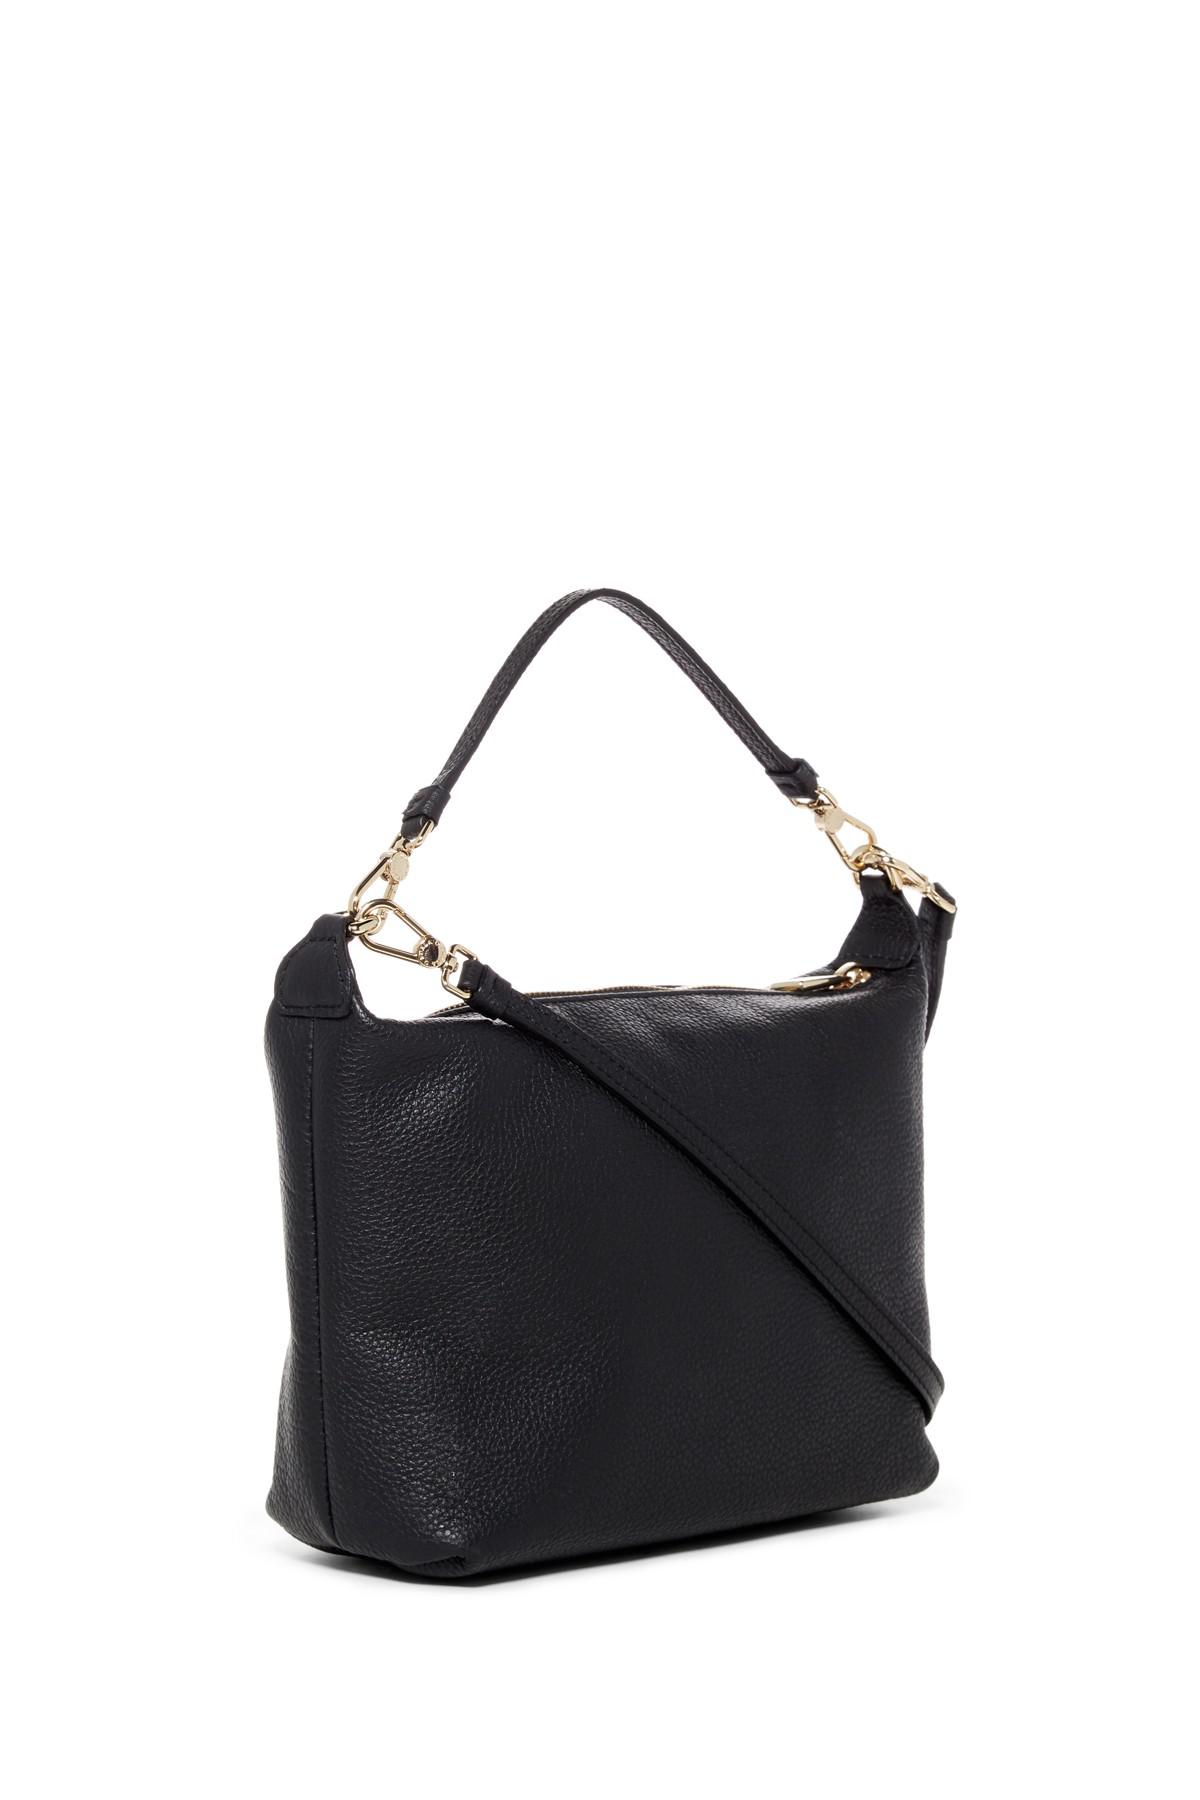 Furla Sophie Leather Crossbody Bag in Onyx (Black) | Lyst